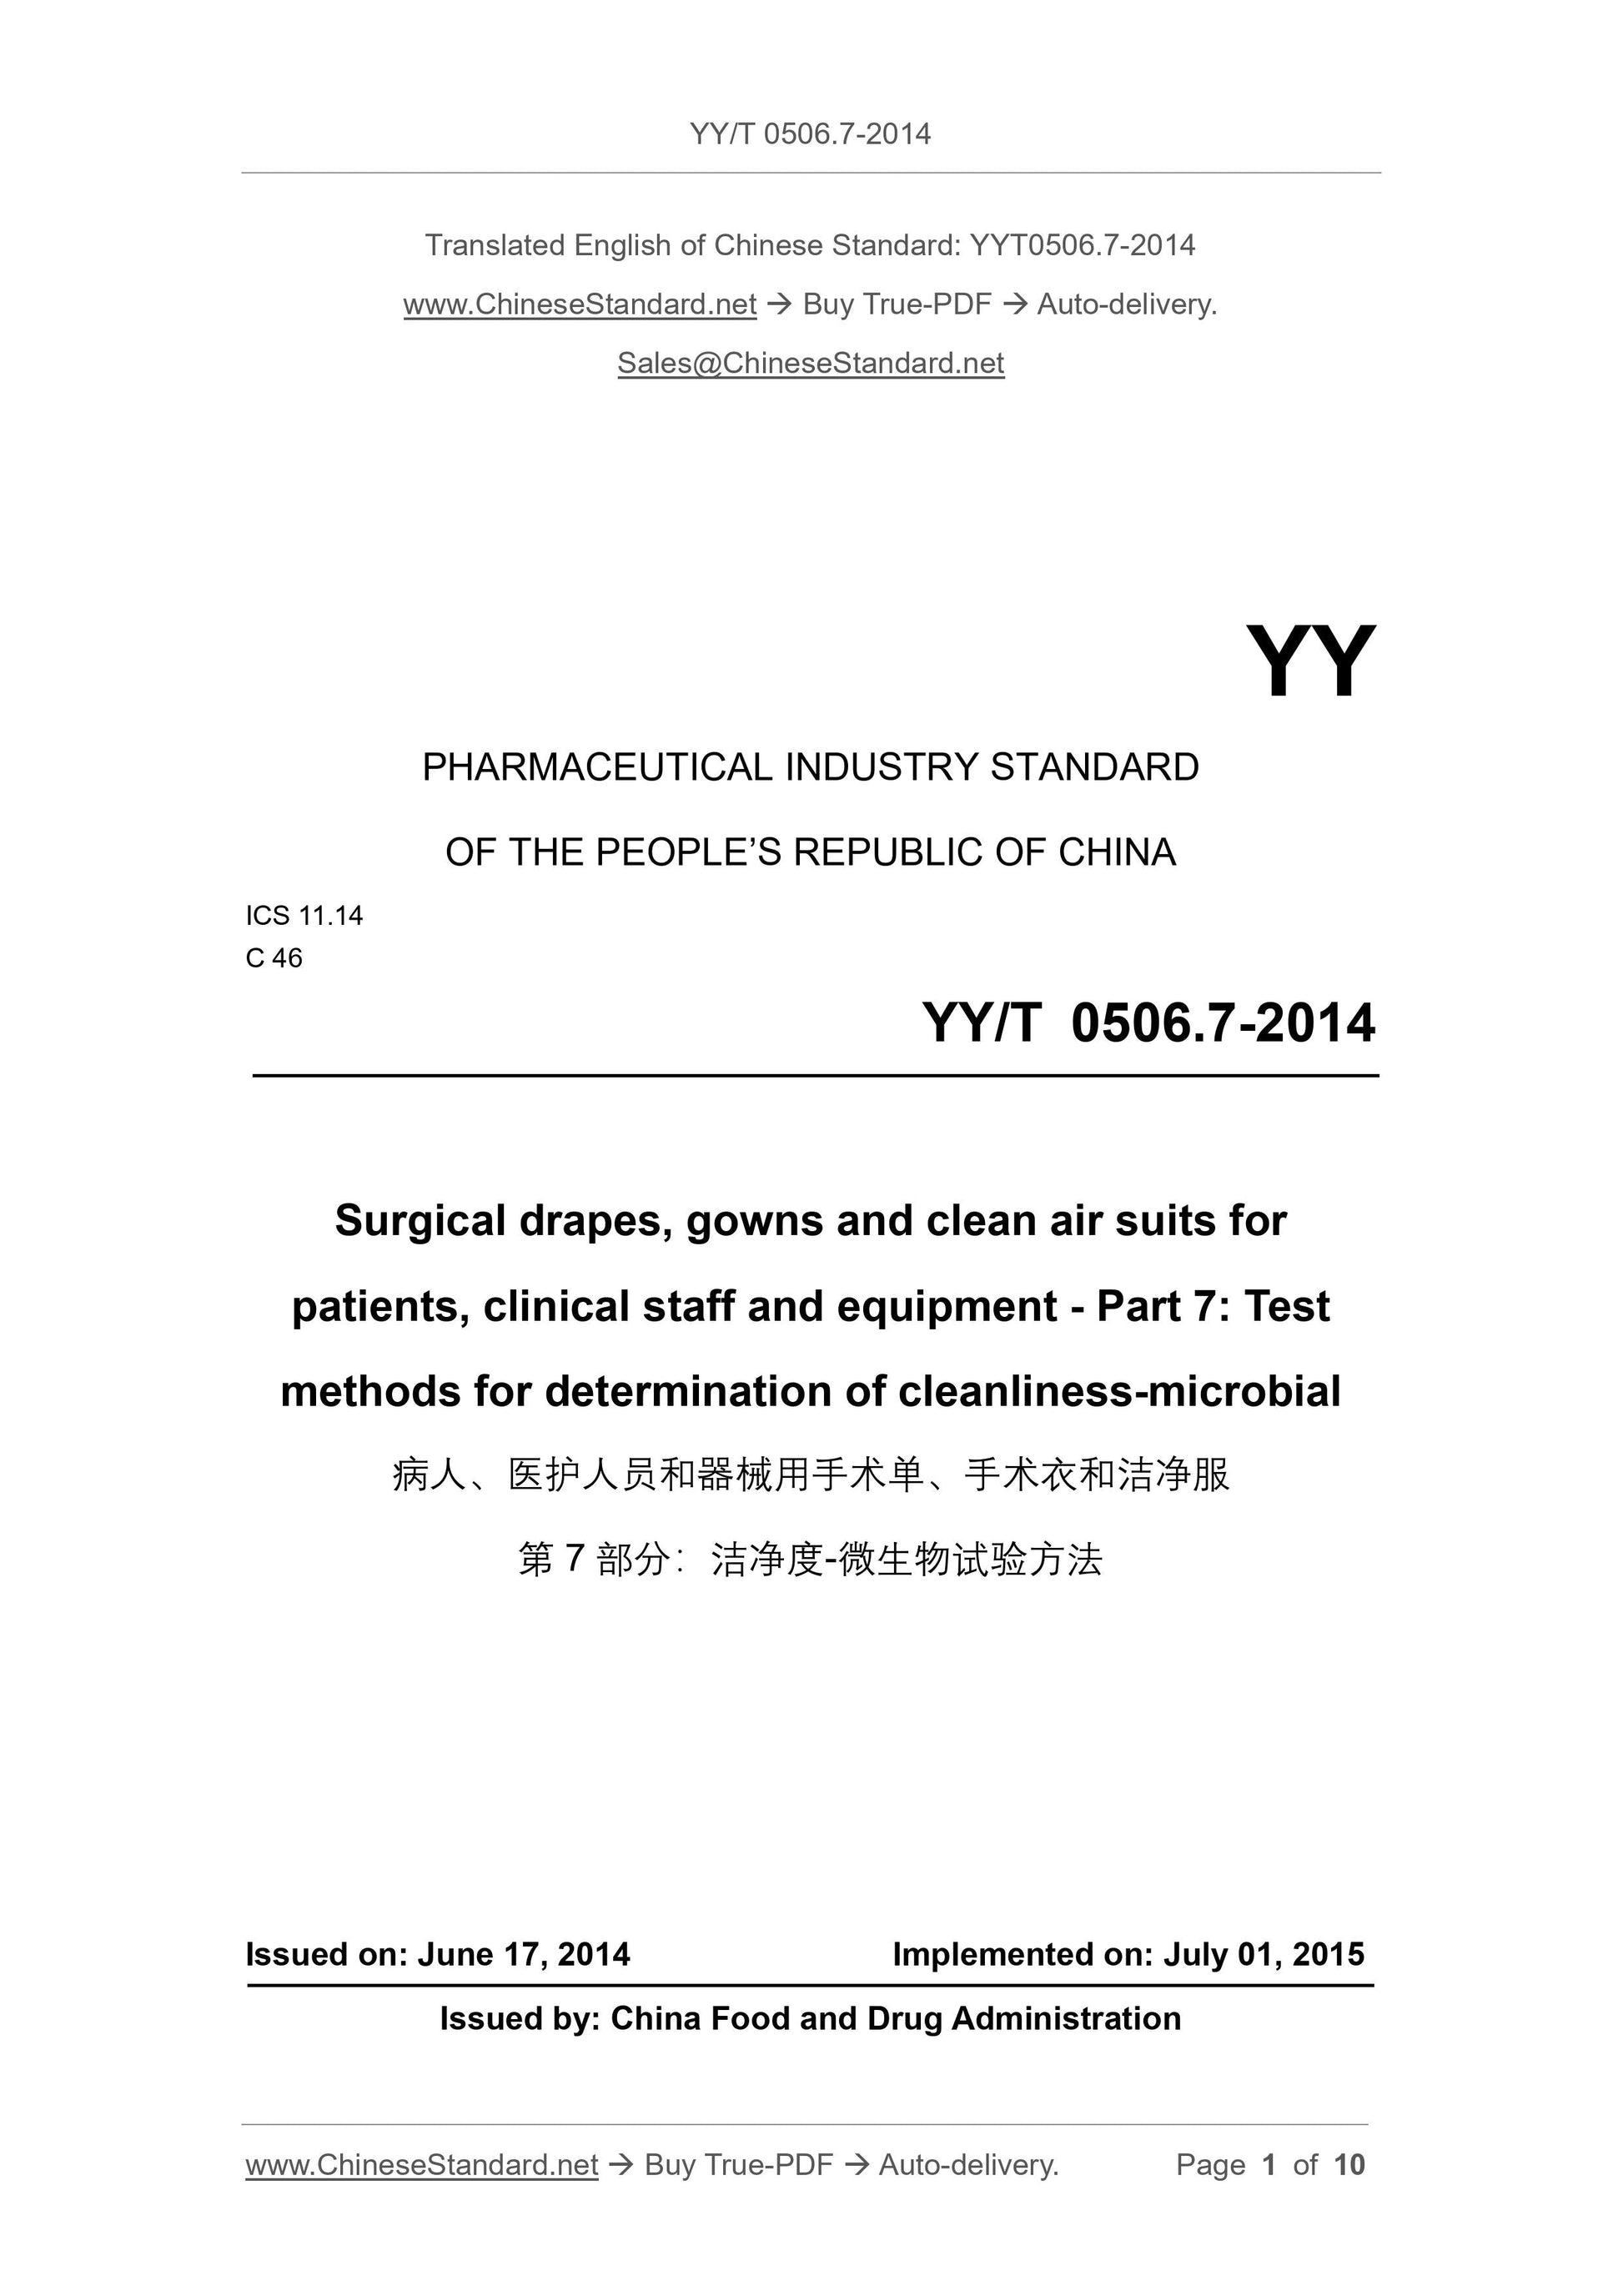 YY/T 0506.7-2014 Page 1